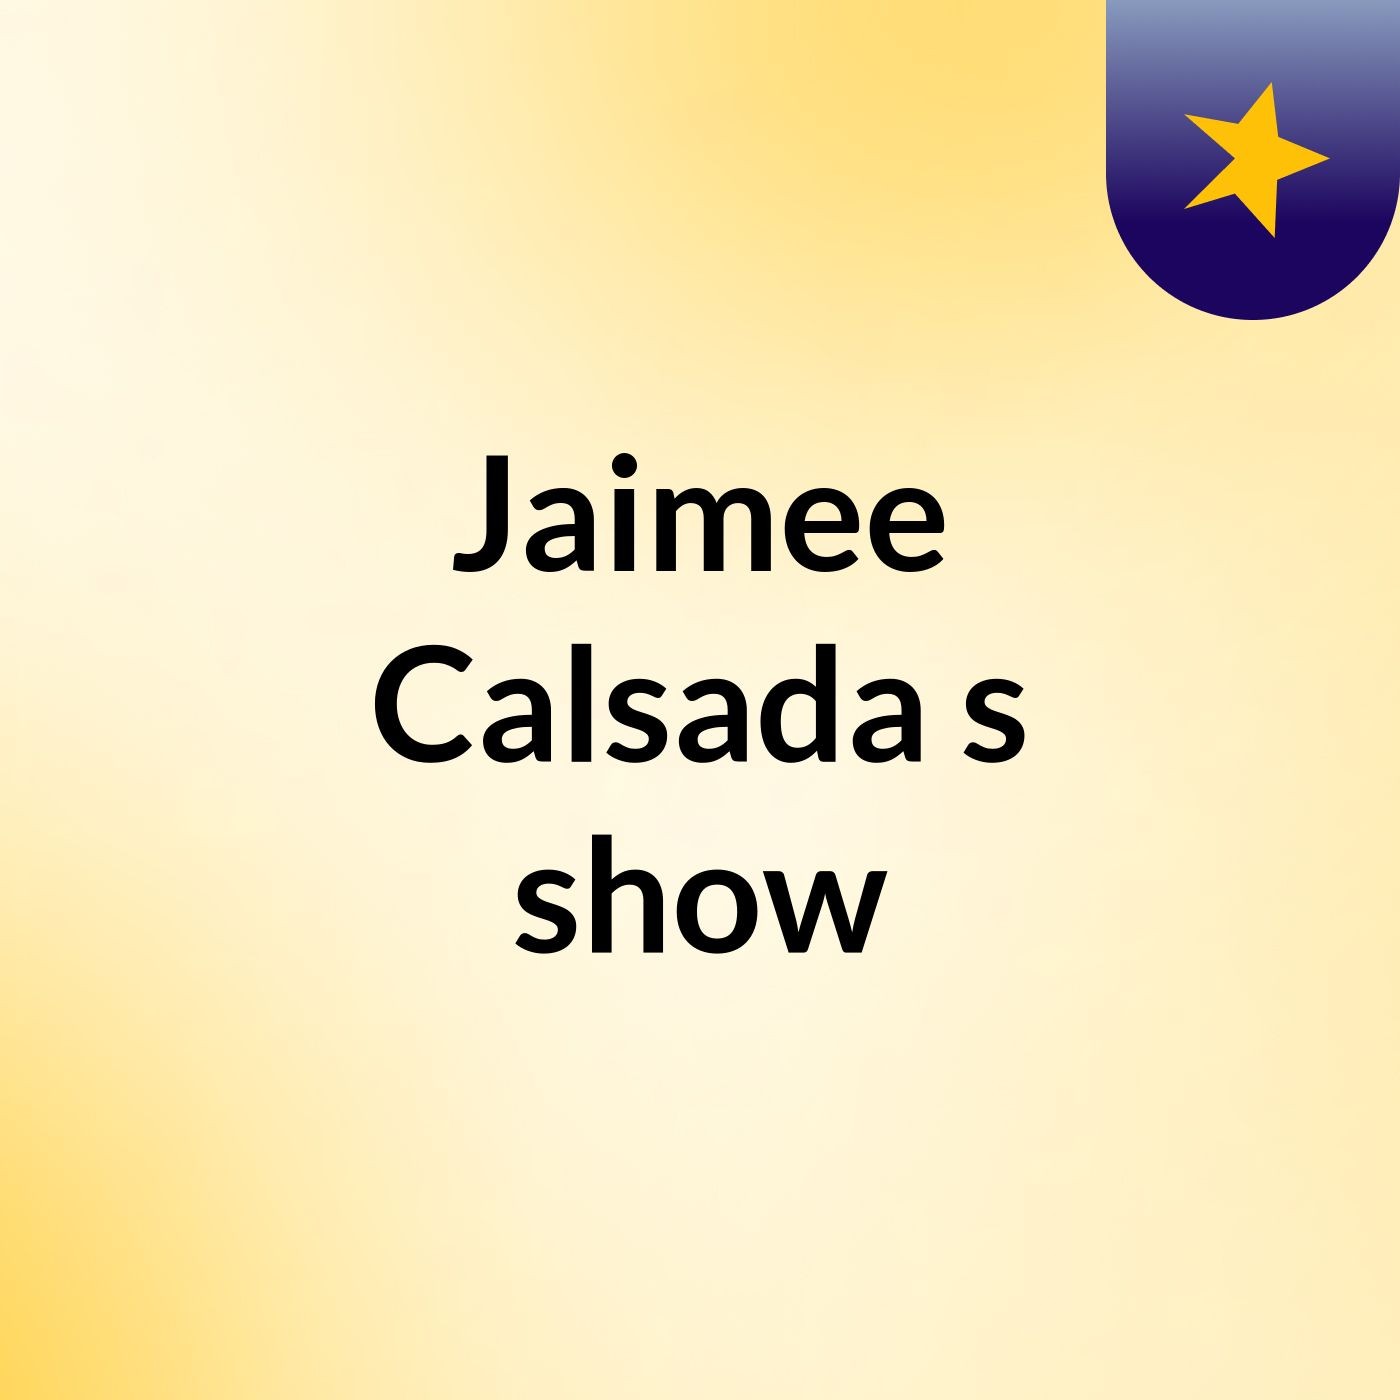 Jaimee Calsada's show